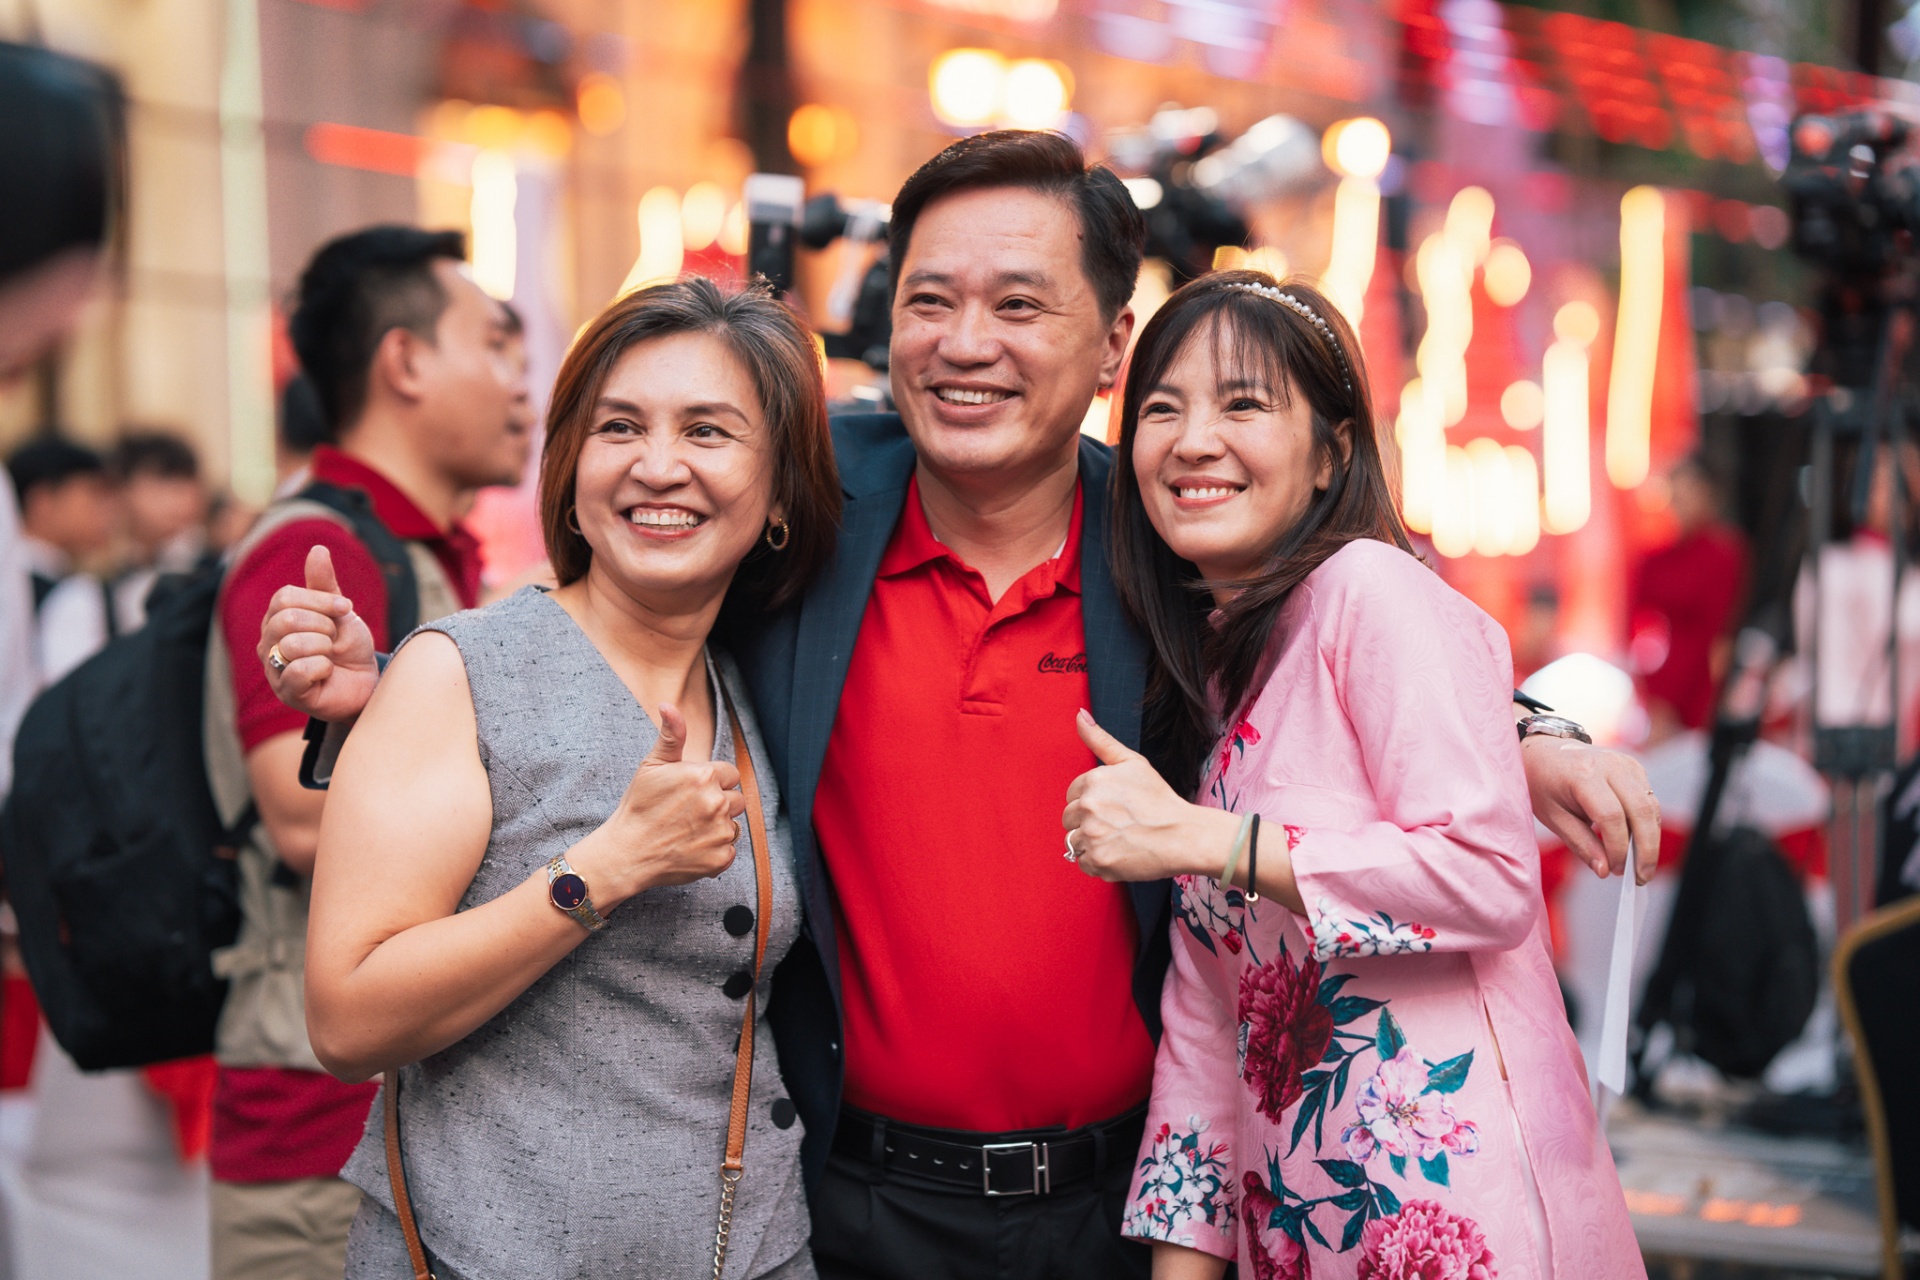 Coca-Cola unites 1,000 Vietnamese families at Lunar New Year celebration